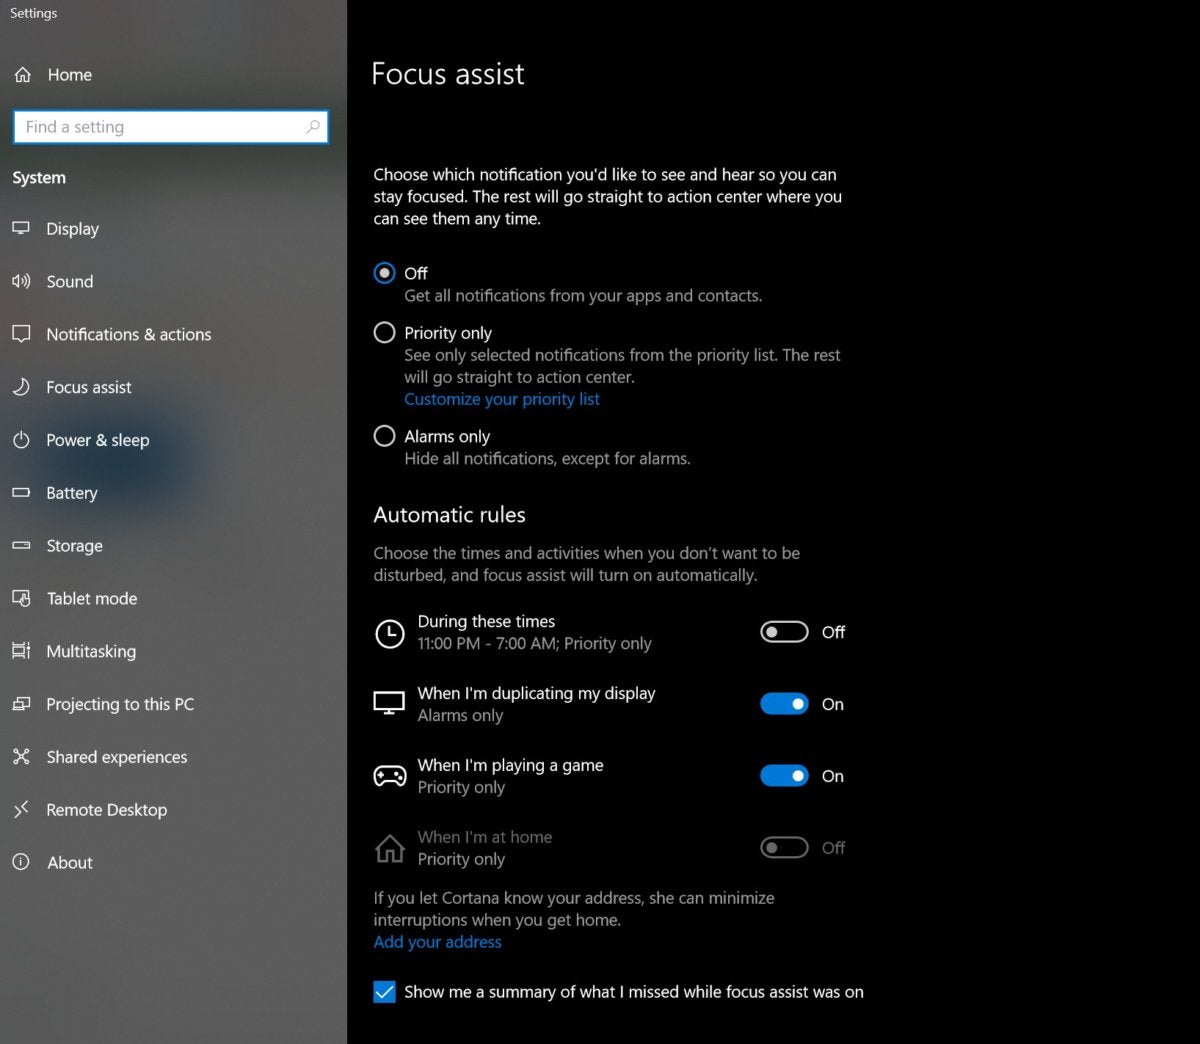 Windows 10 Spring Creators Update focus assist setting